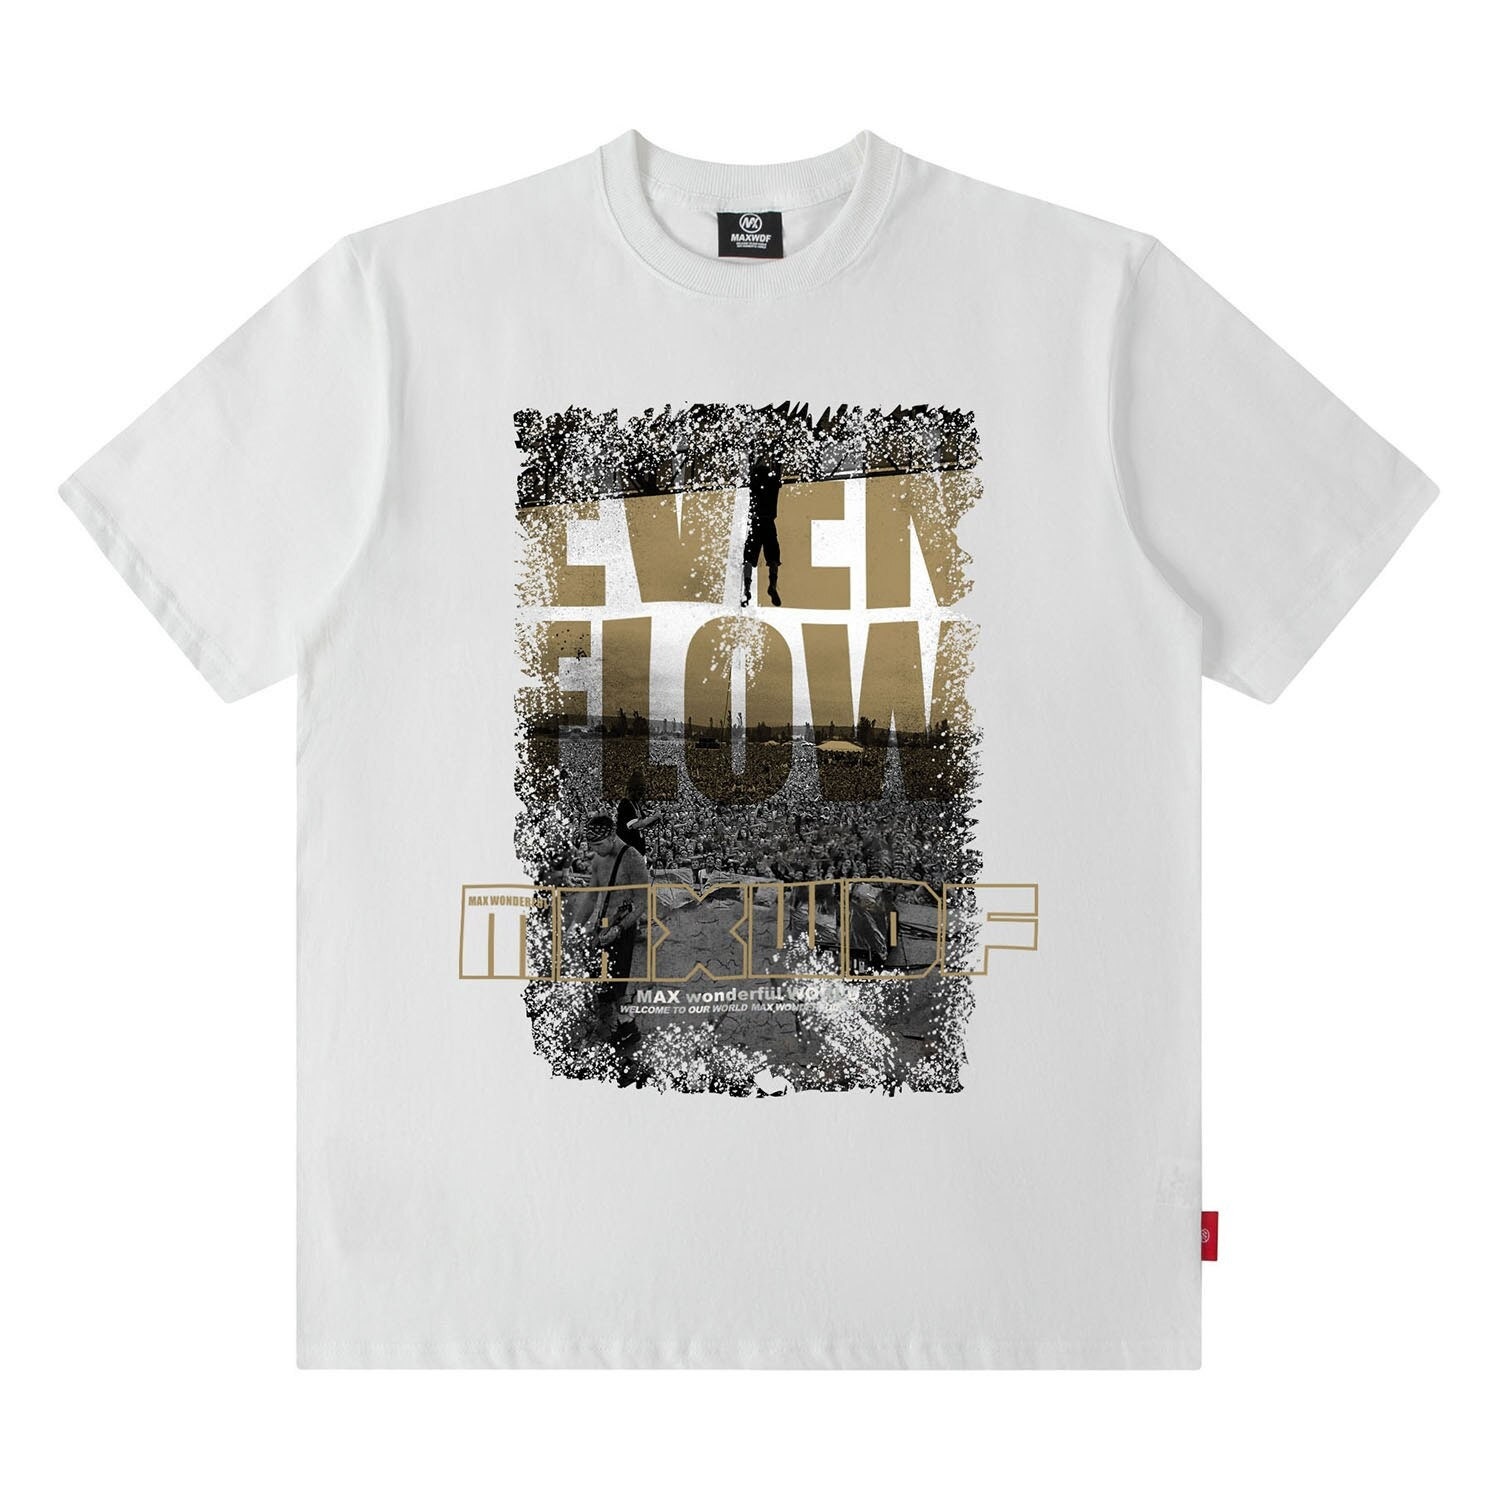 Streetwear Even Flow Artwork Tee Shirt Urban Fashion Short Sleeves Black Graphic T Shirt